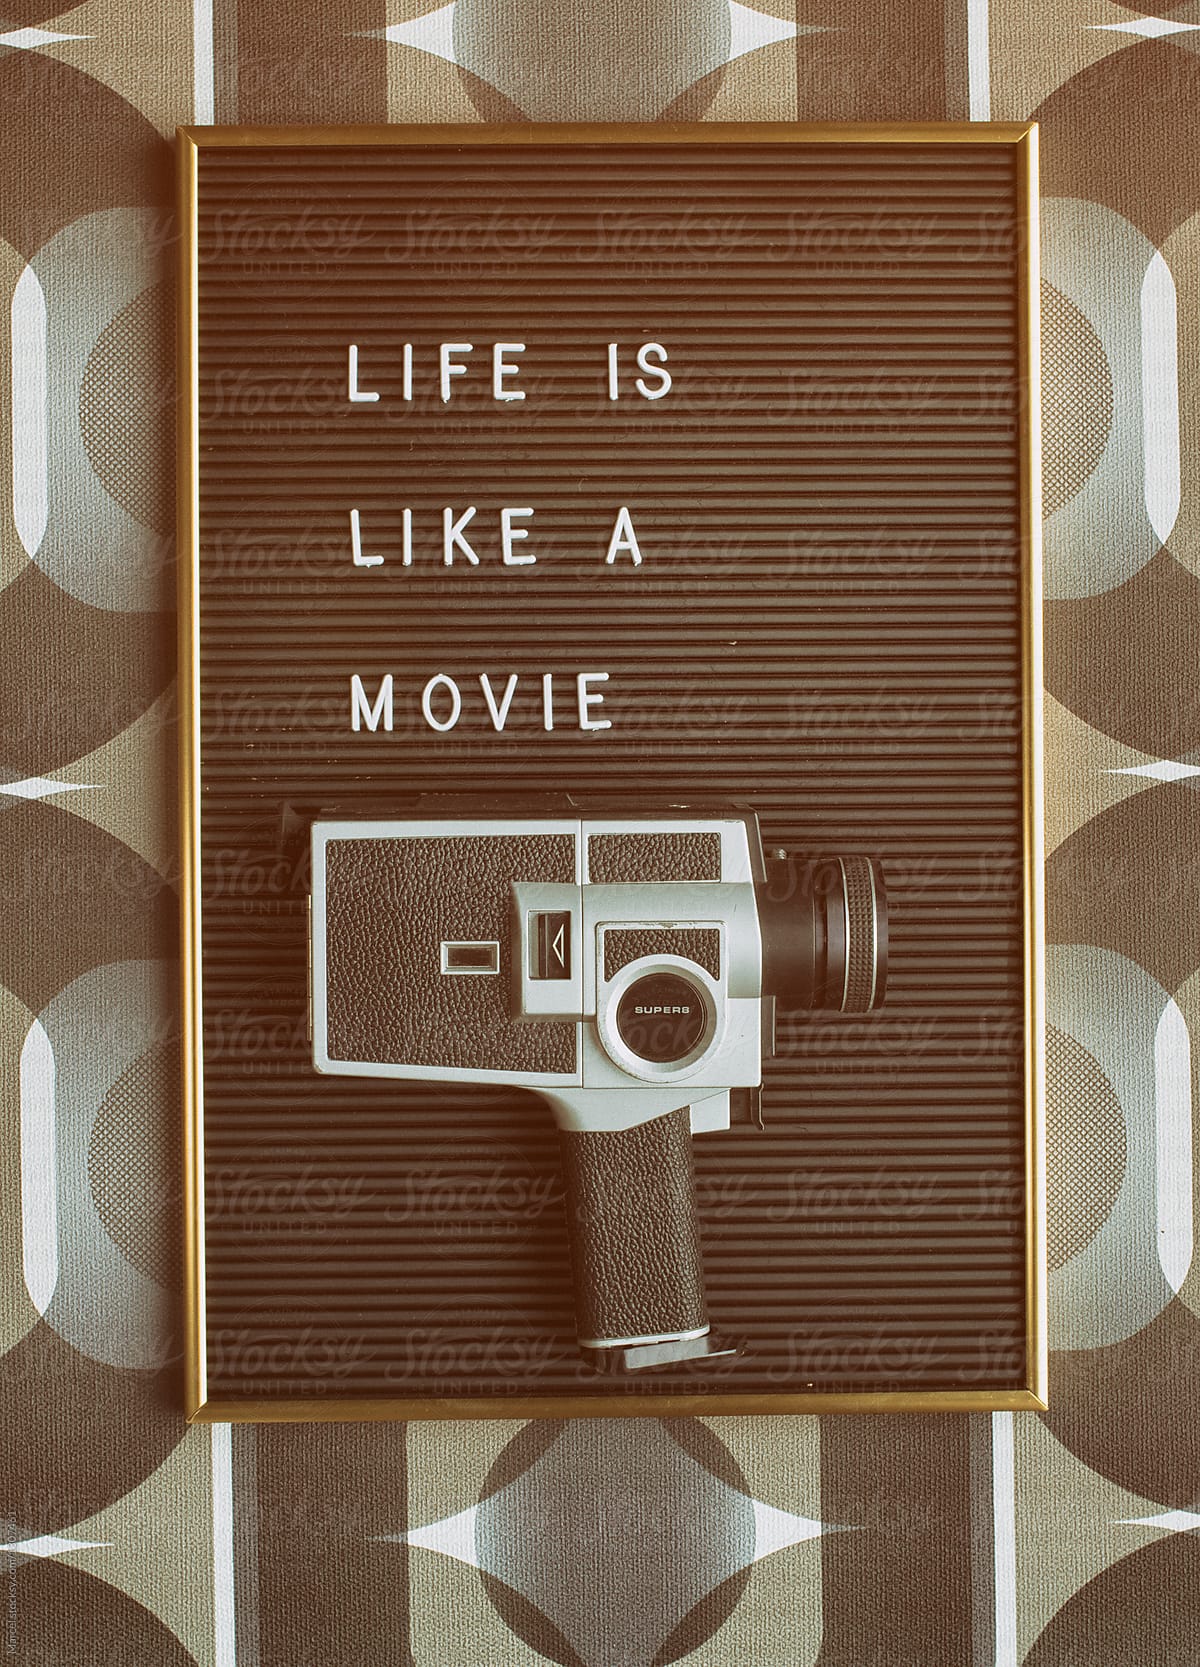 Life is like a movie